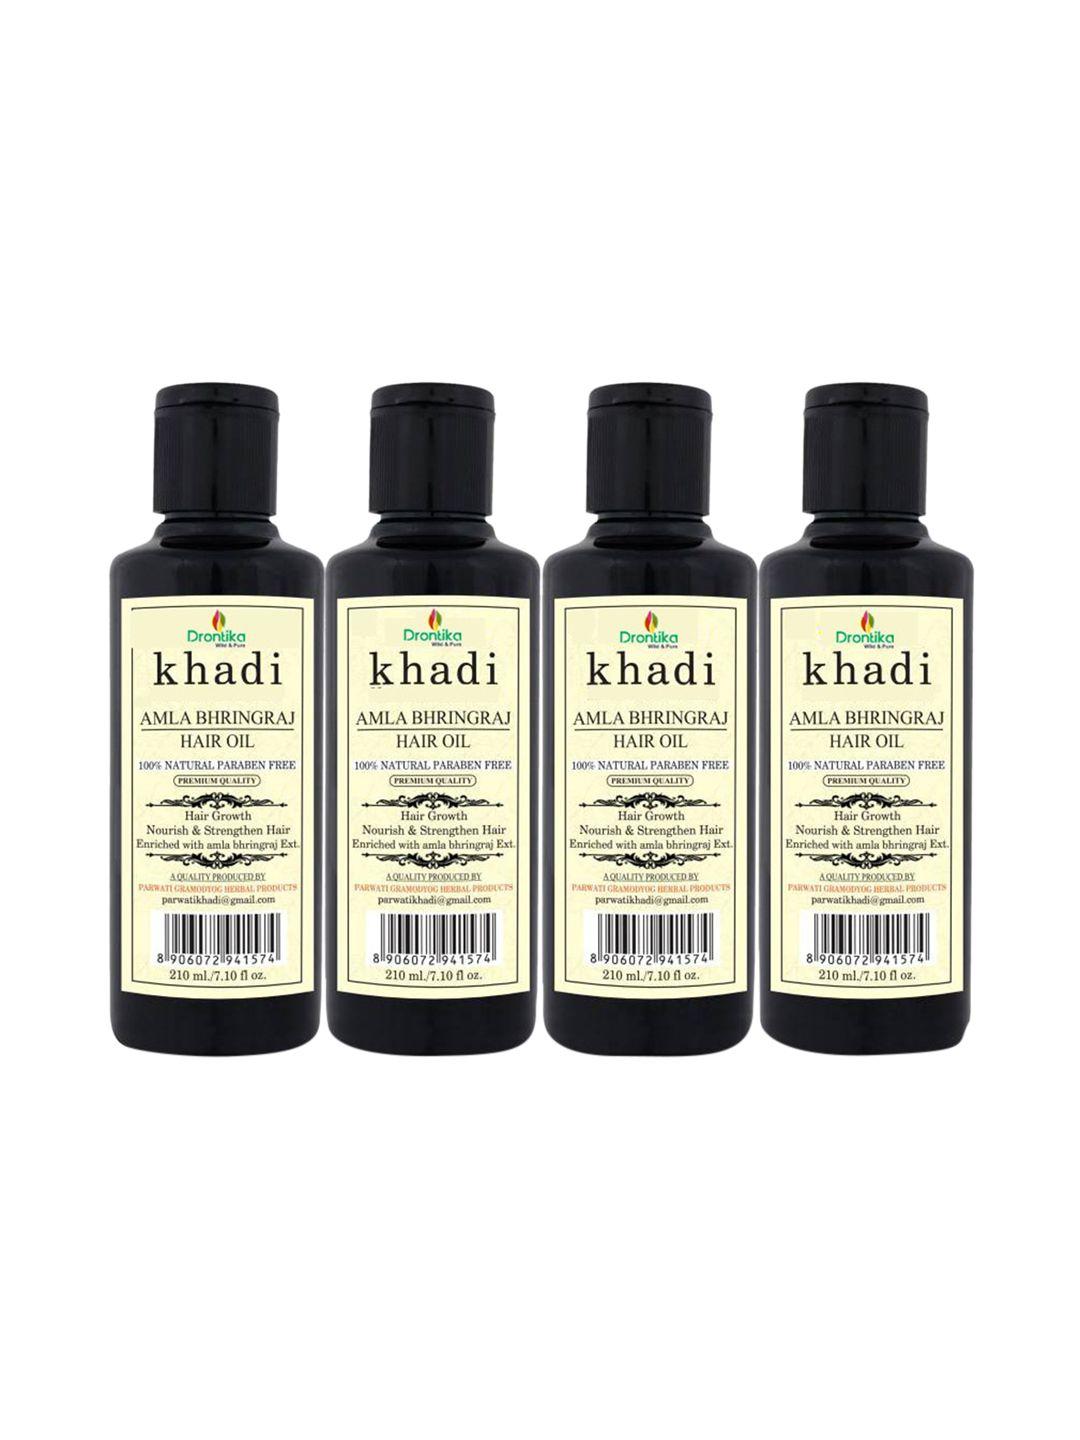 drontika set of 4 khadi 100% natural paraben free amla bhringraj hair oil - 210 ml each